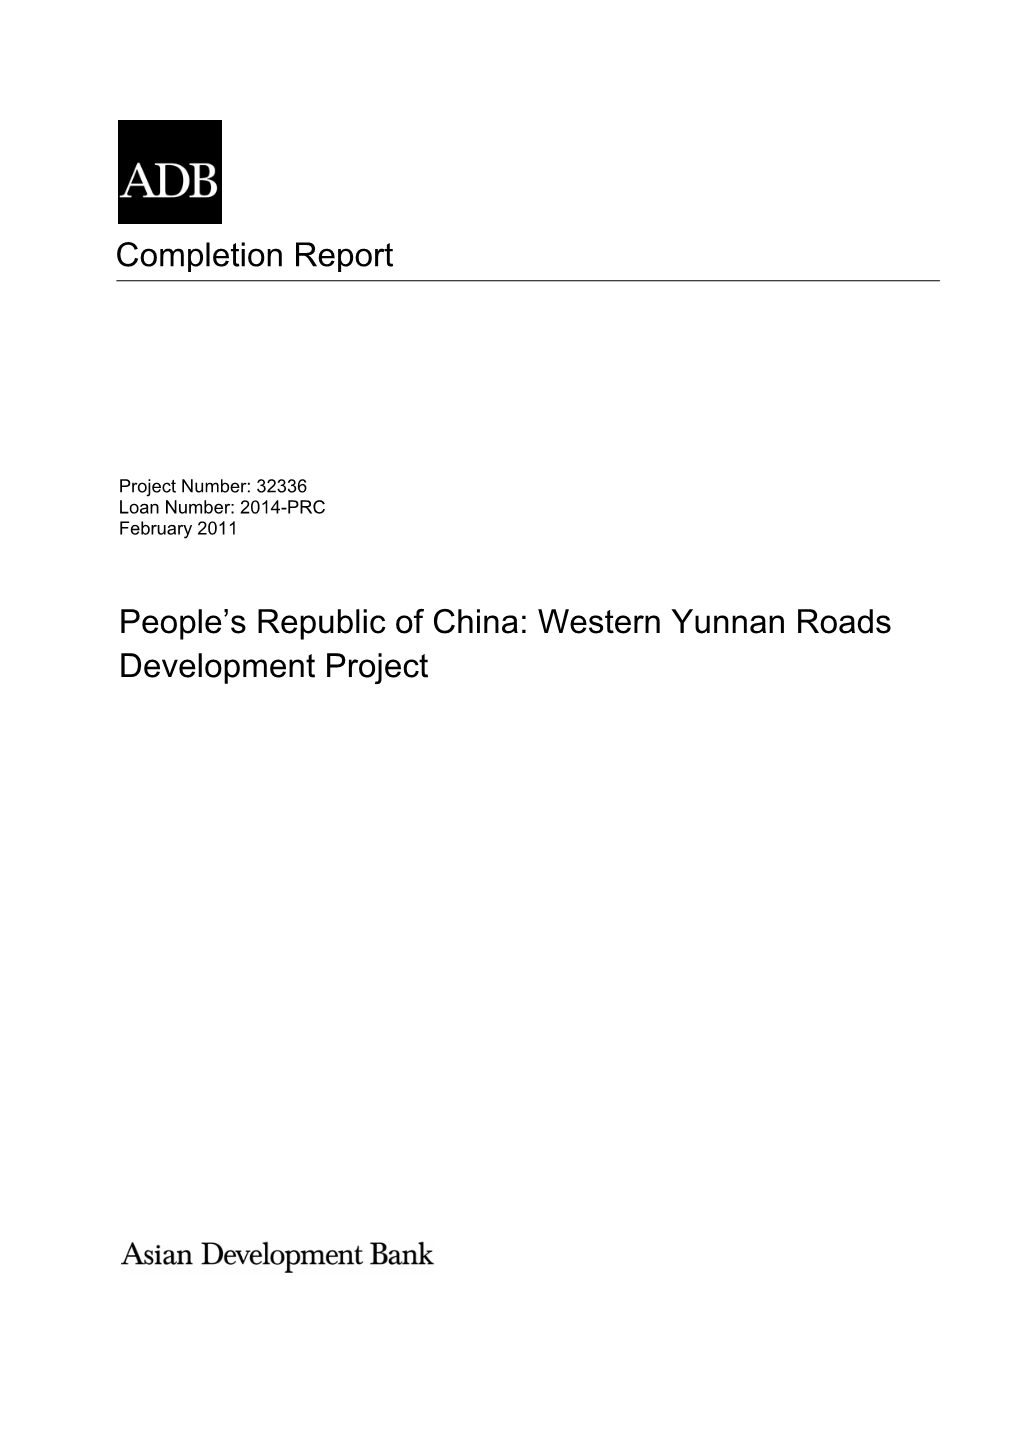 PCR: PRC: Western Yunnan Roads Development Project